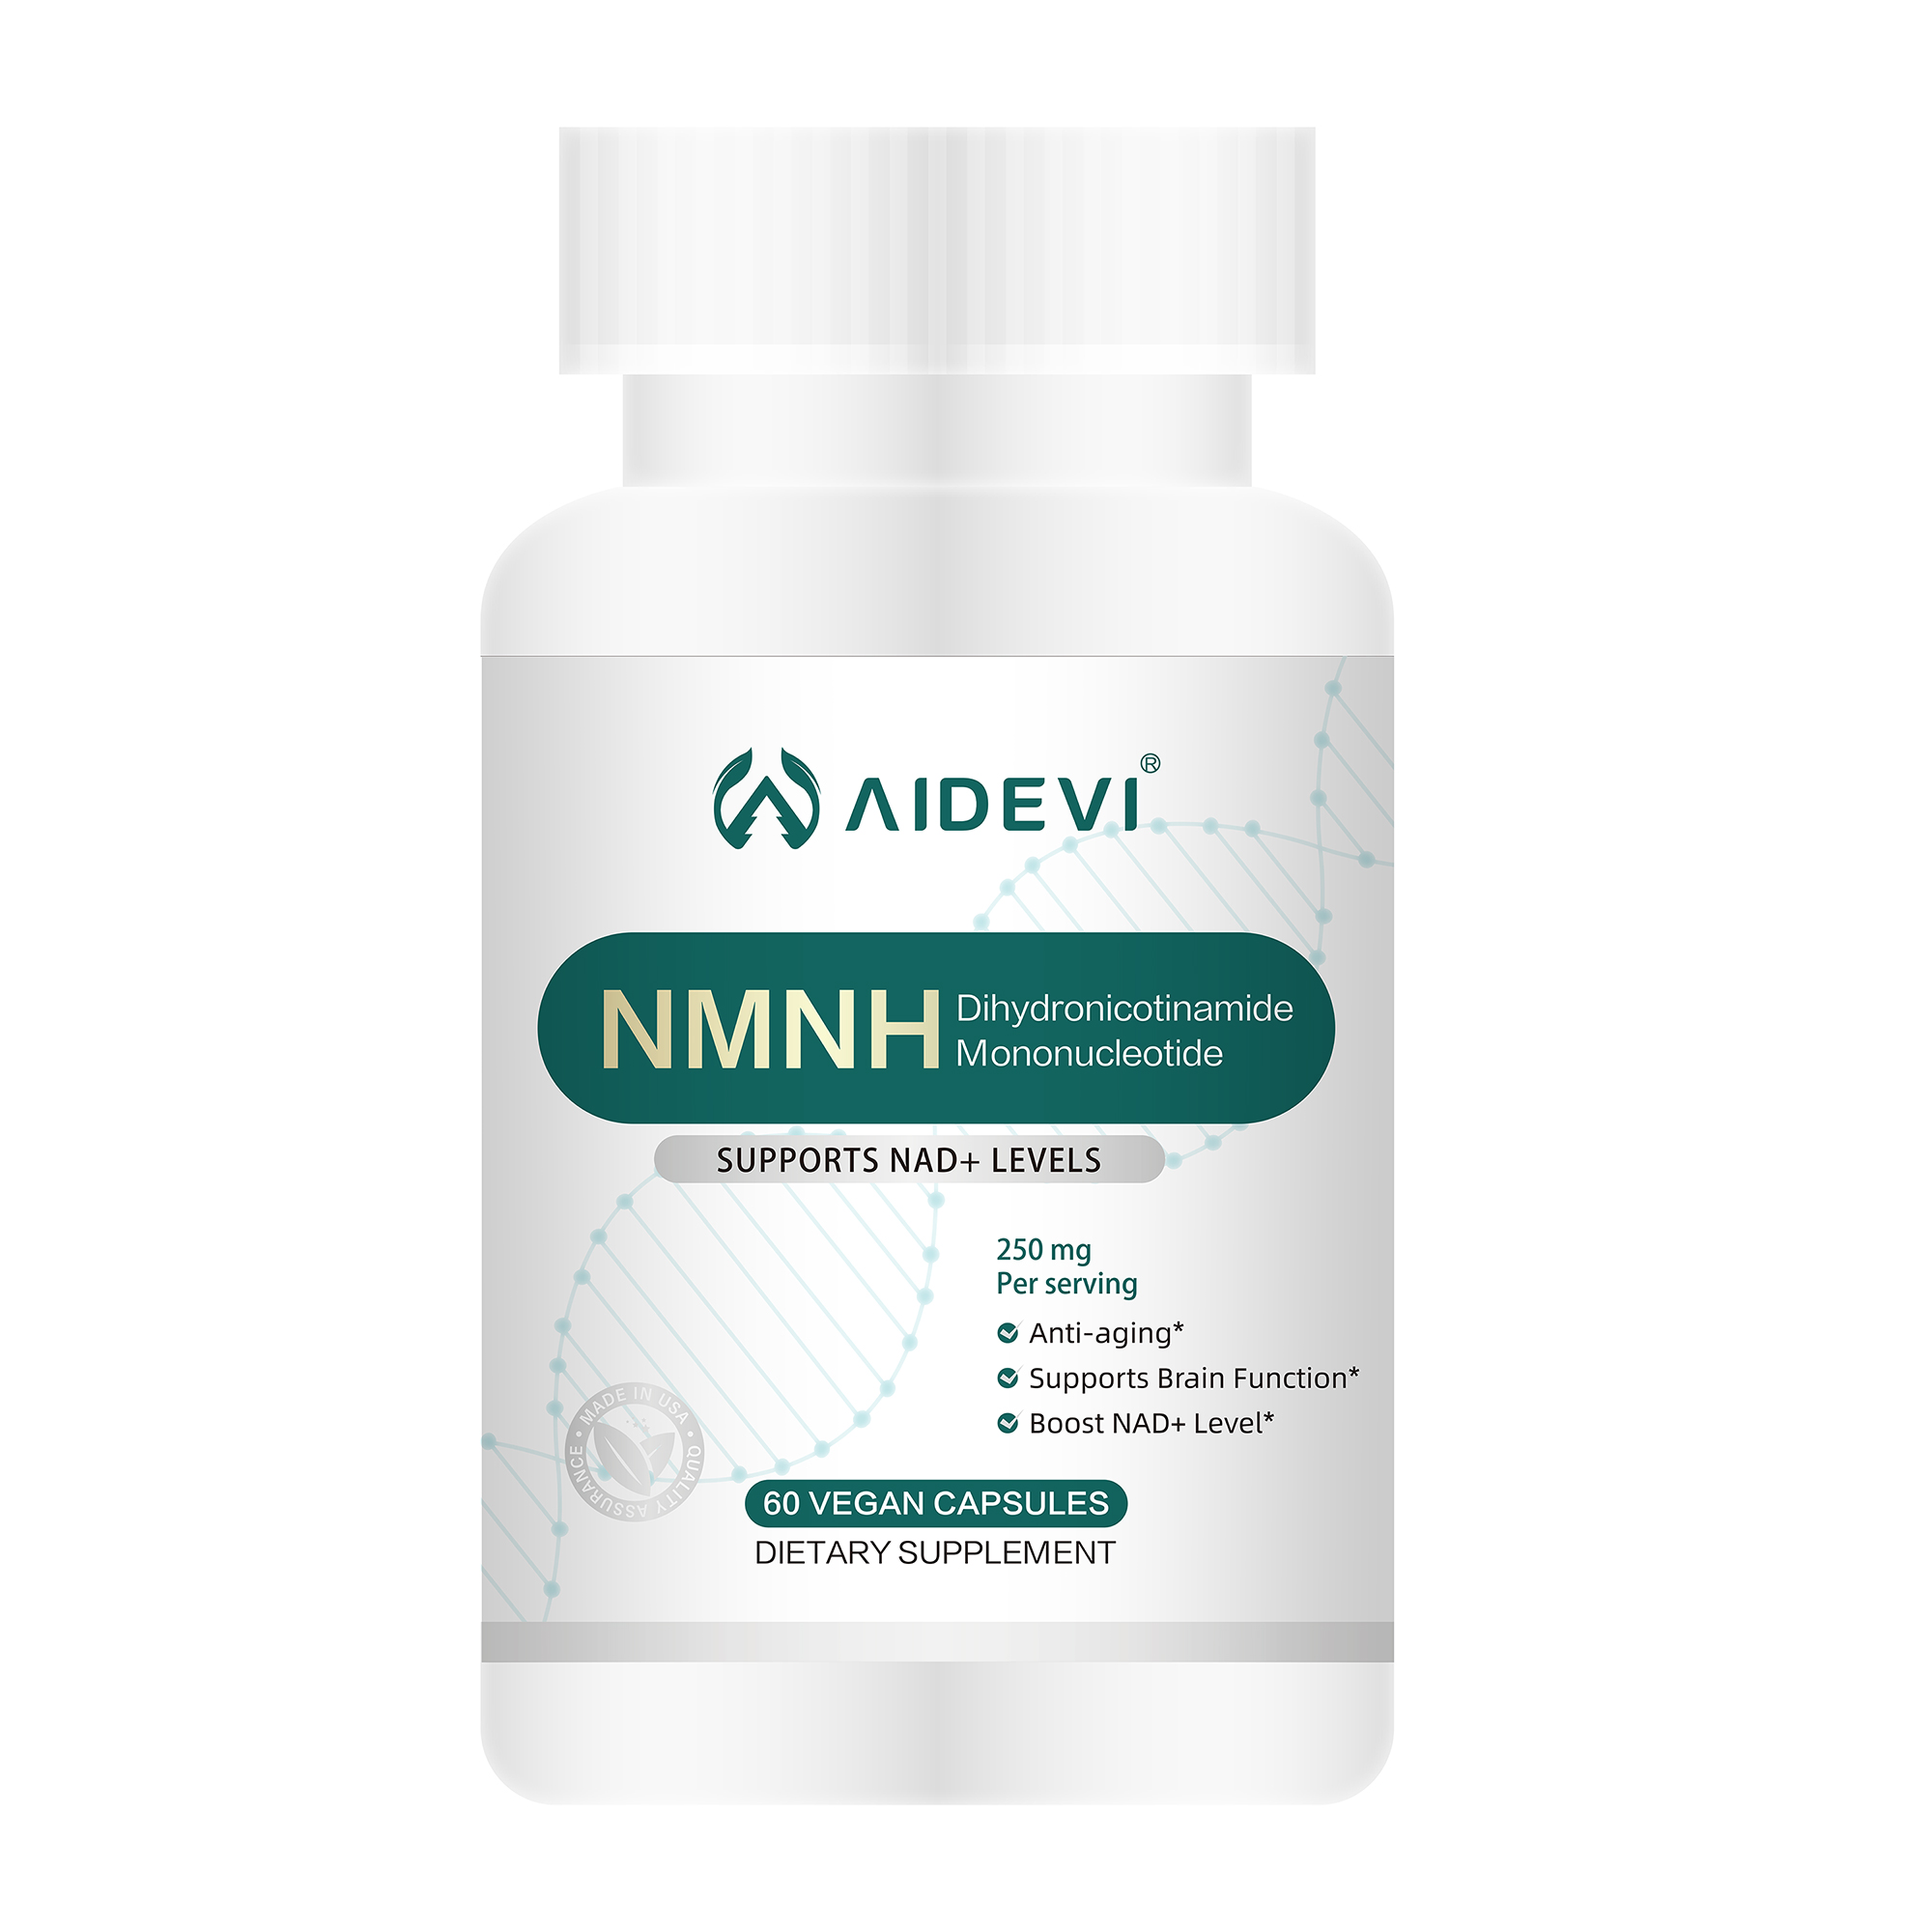 NMN招商网为您介绍NMNH是如何提高NADH水平的